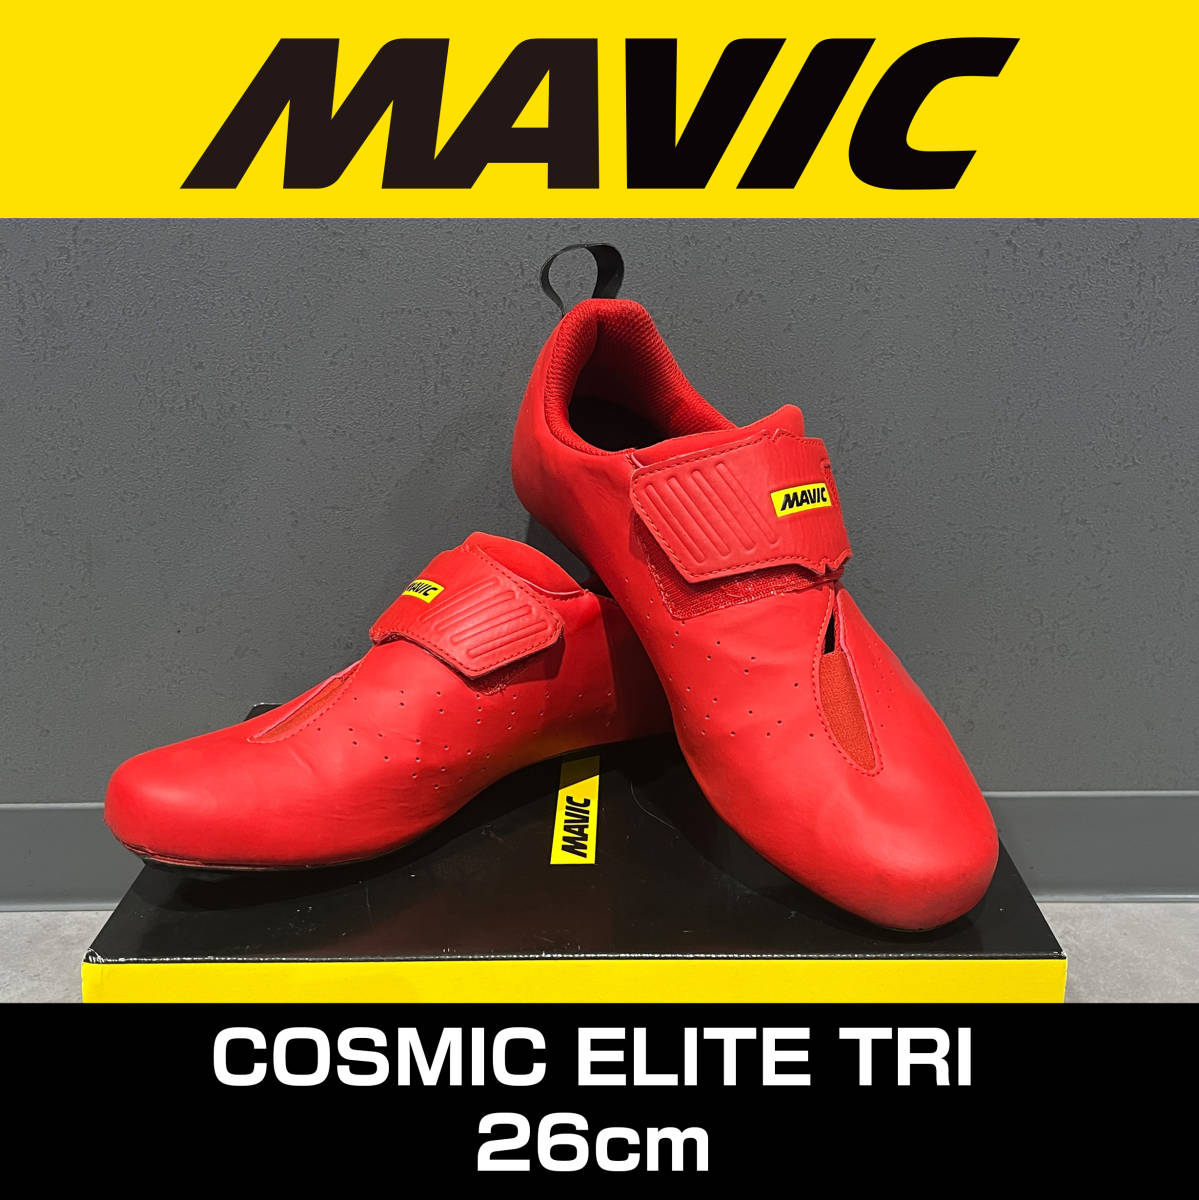 MAVIC COSMIC ELITE TRI 26cm コスミックエリート TRI 定価24200円 マヴィック ロードバイク トライアスロンシューズ_画像1